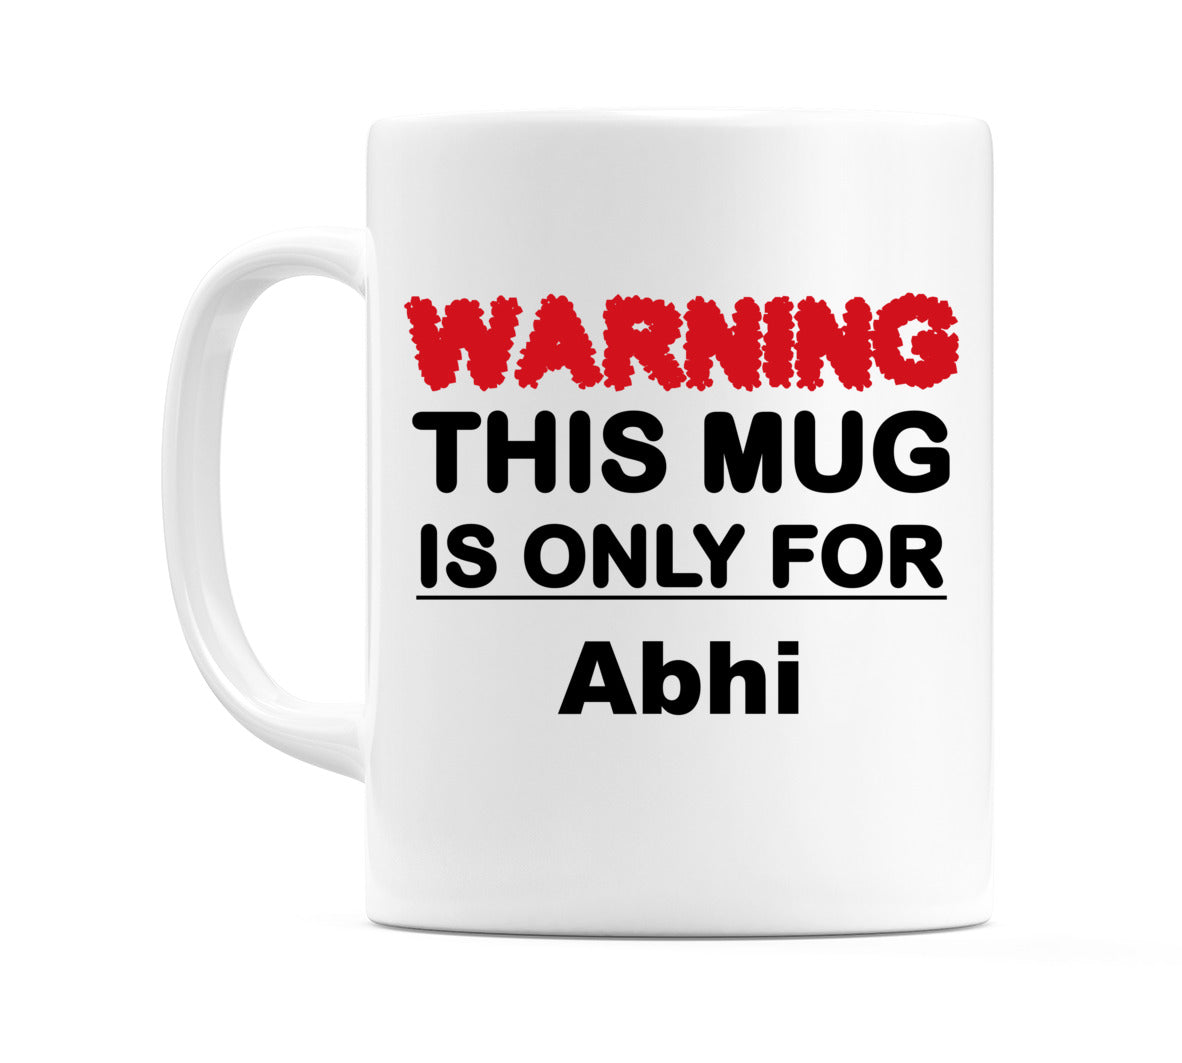 Warning This Mug is ONLY for Abhi Mug